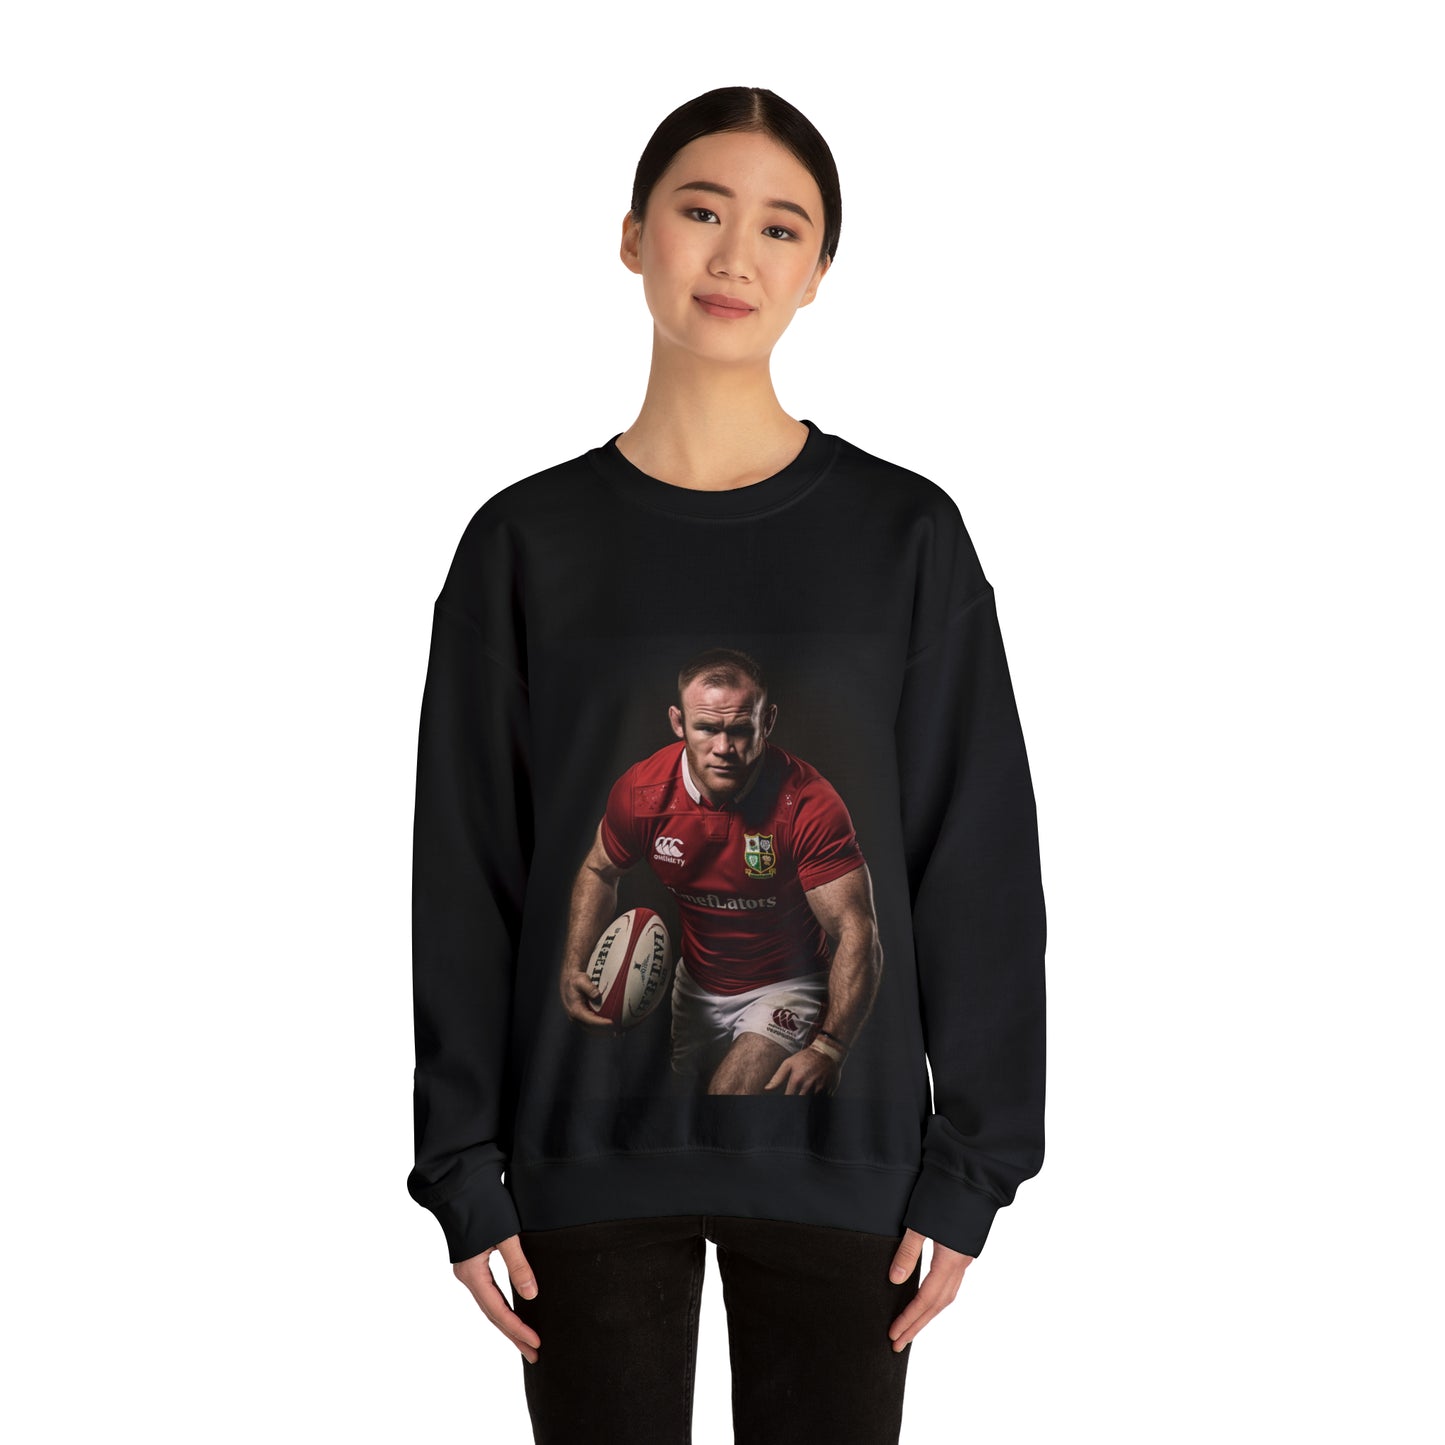 Ready Rooney - black sweatshirt